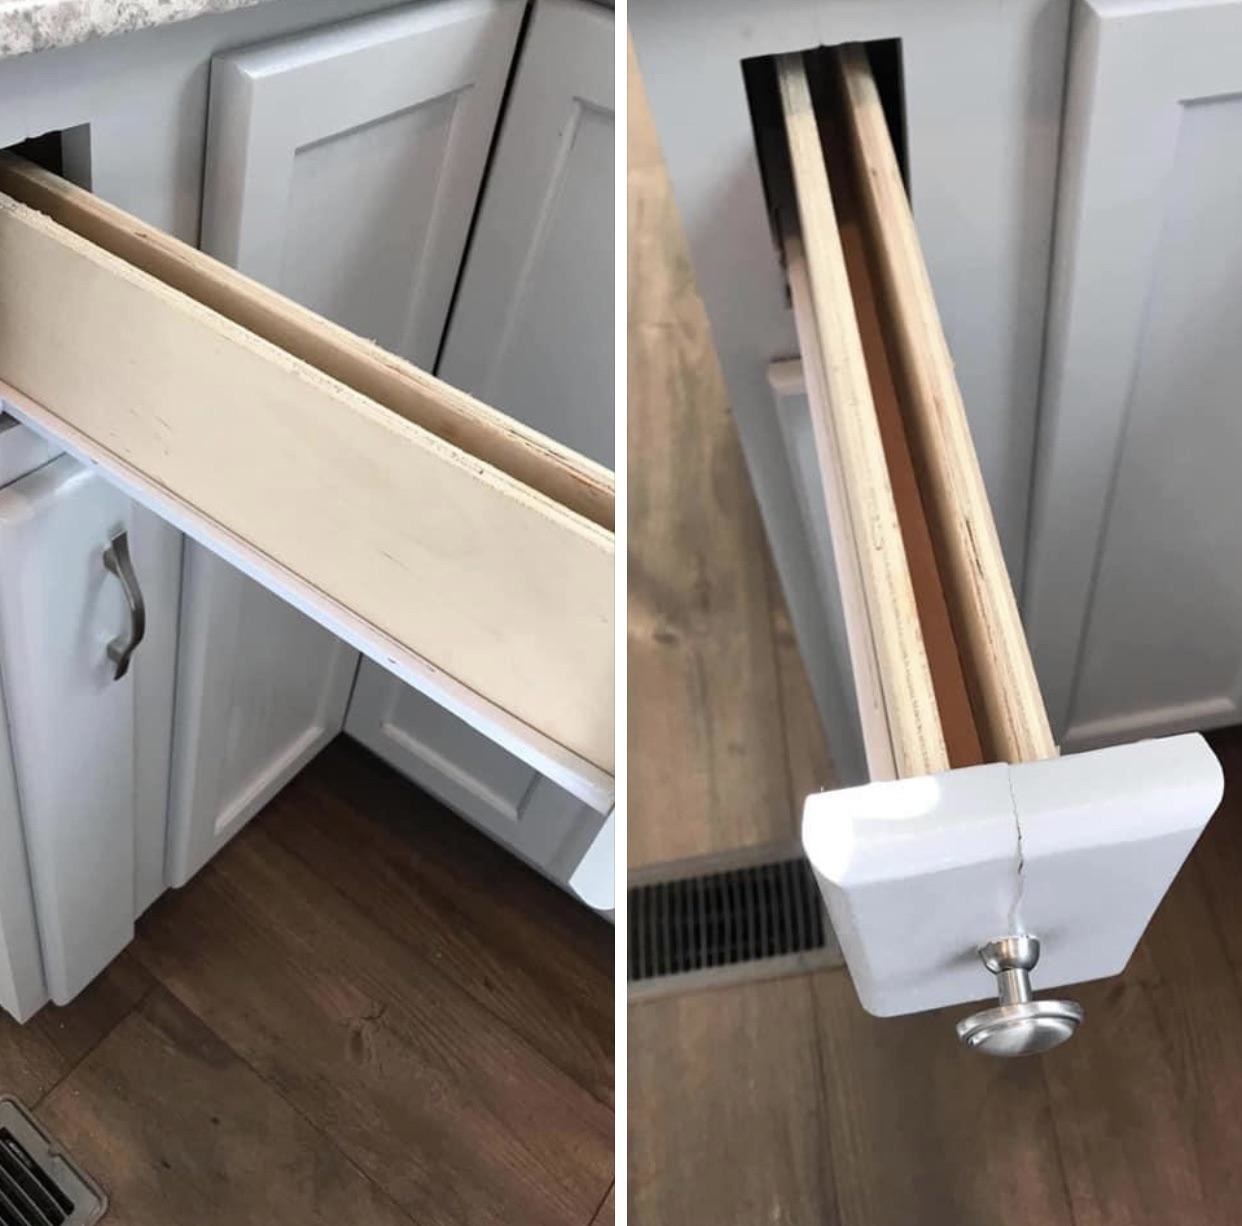 unusably narrow drawer